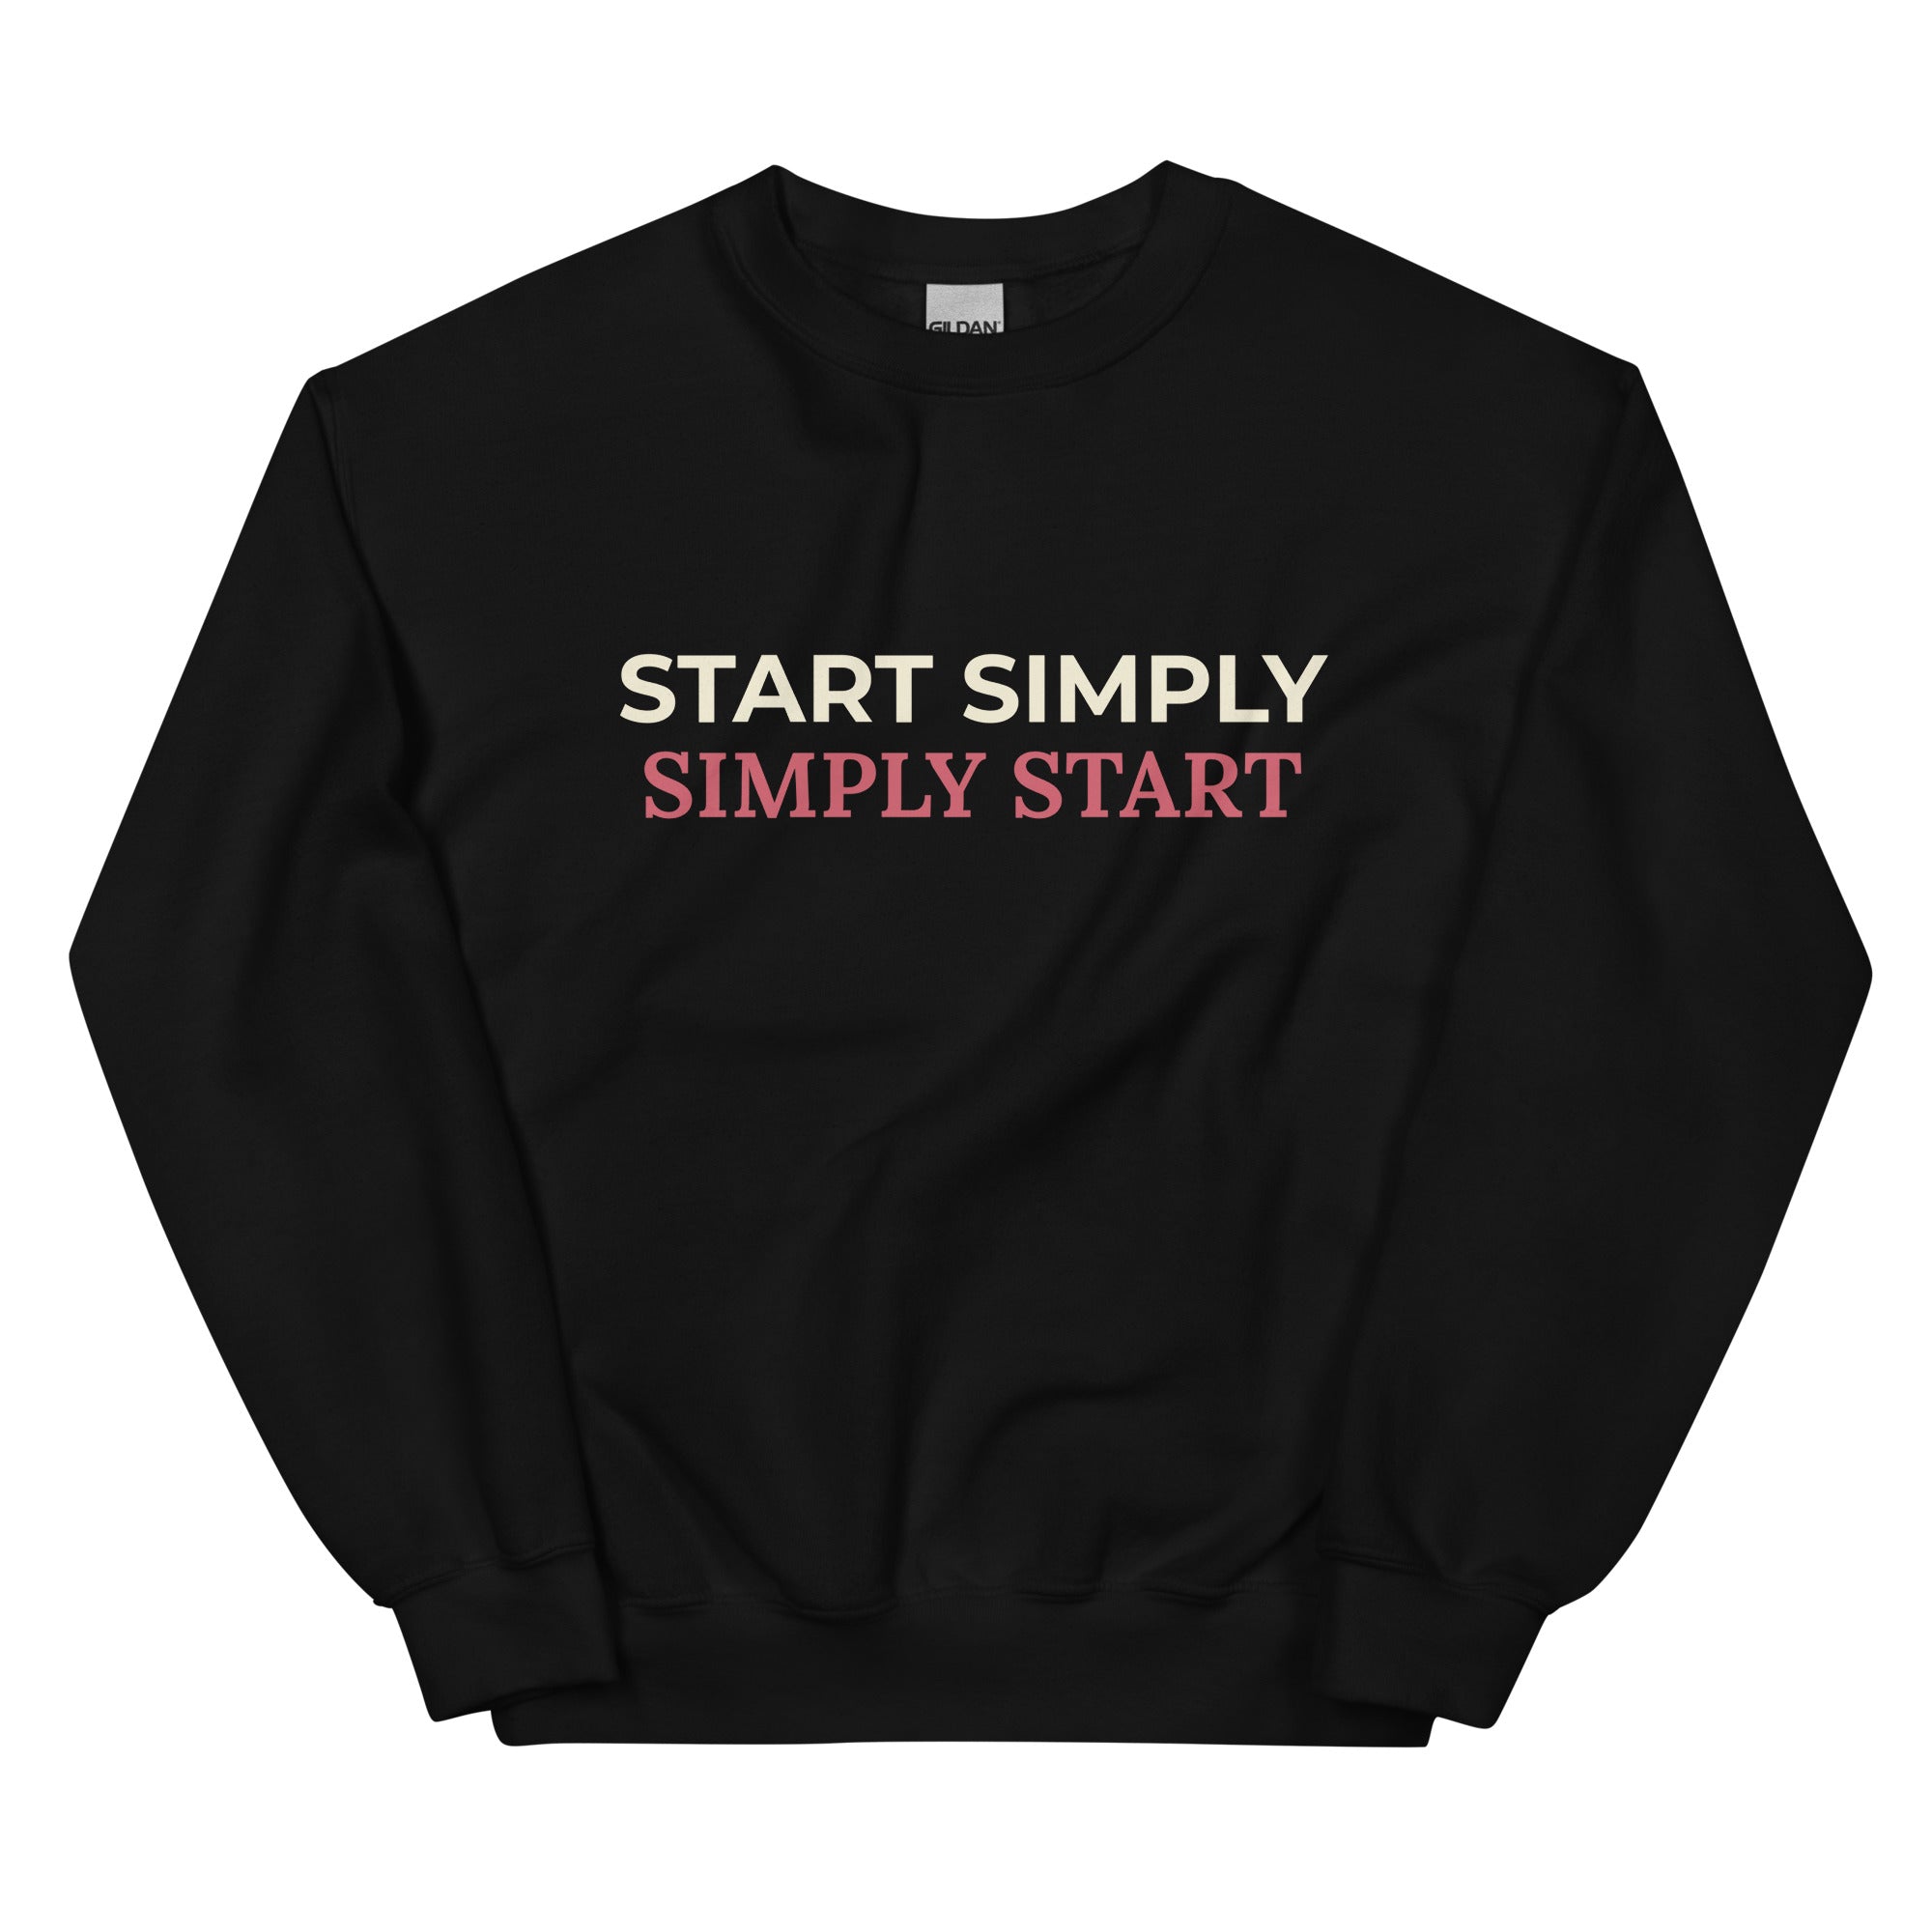 Start simply black sweatshirt